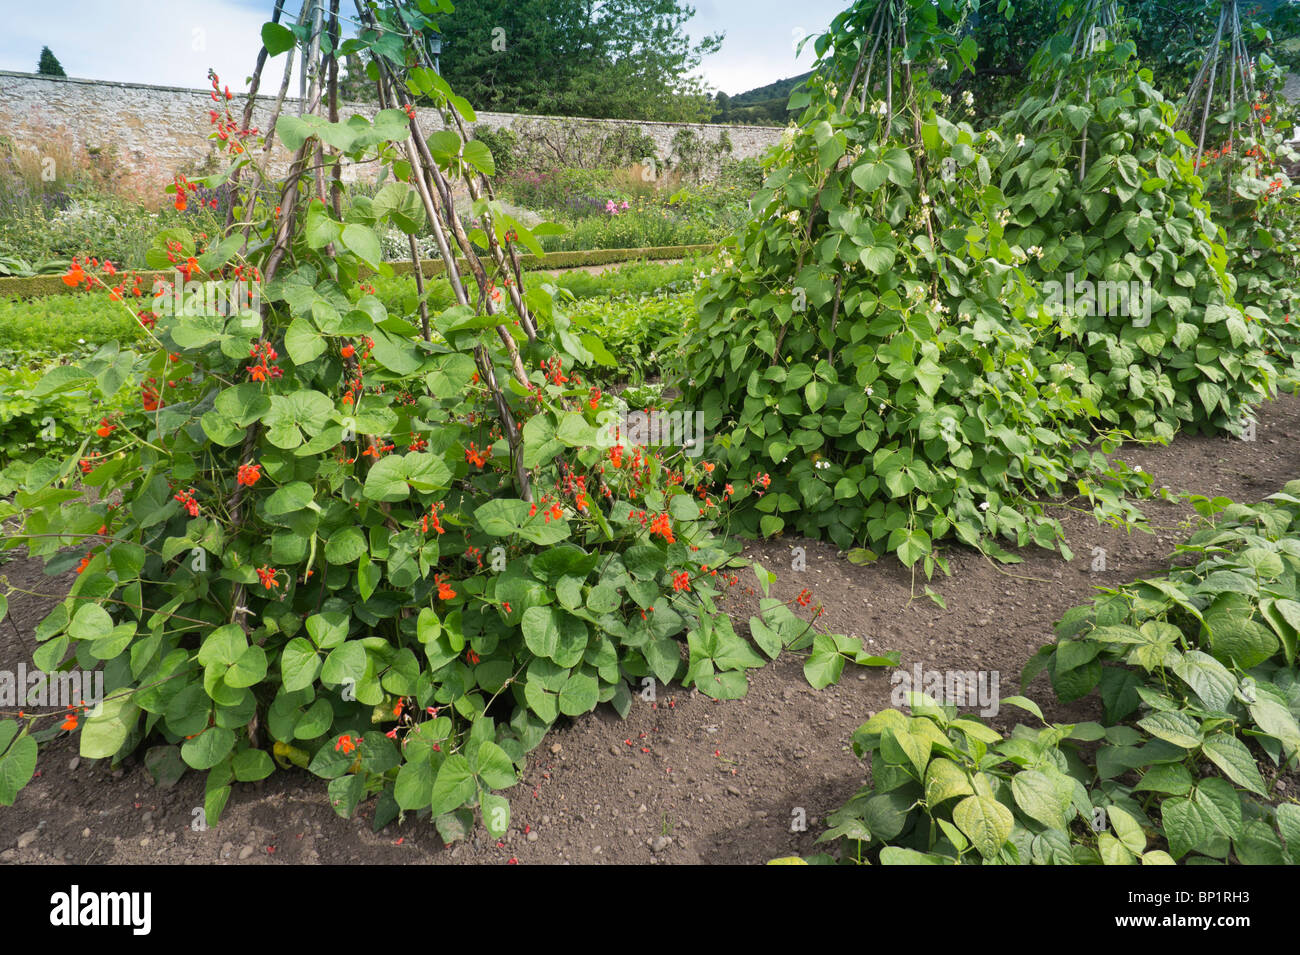 Harmony Gardens, Melrose, Scottish Borders - kitchen garden or vegetable plot - bean supports Stock Photo